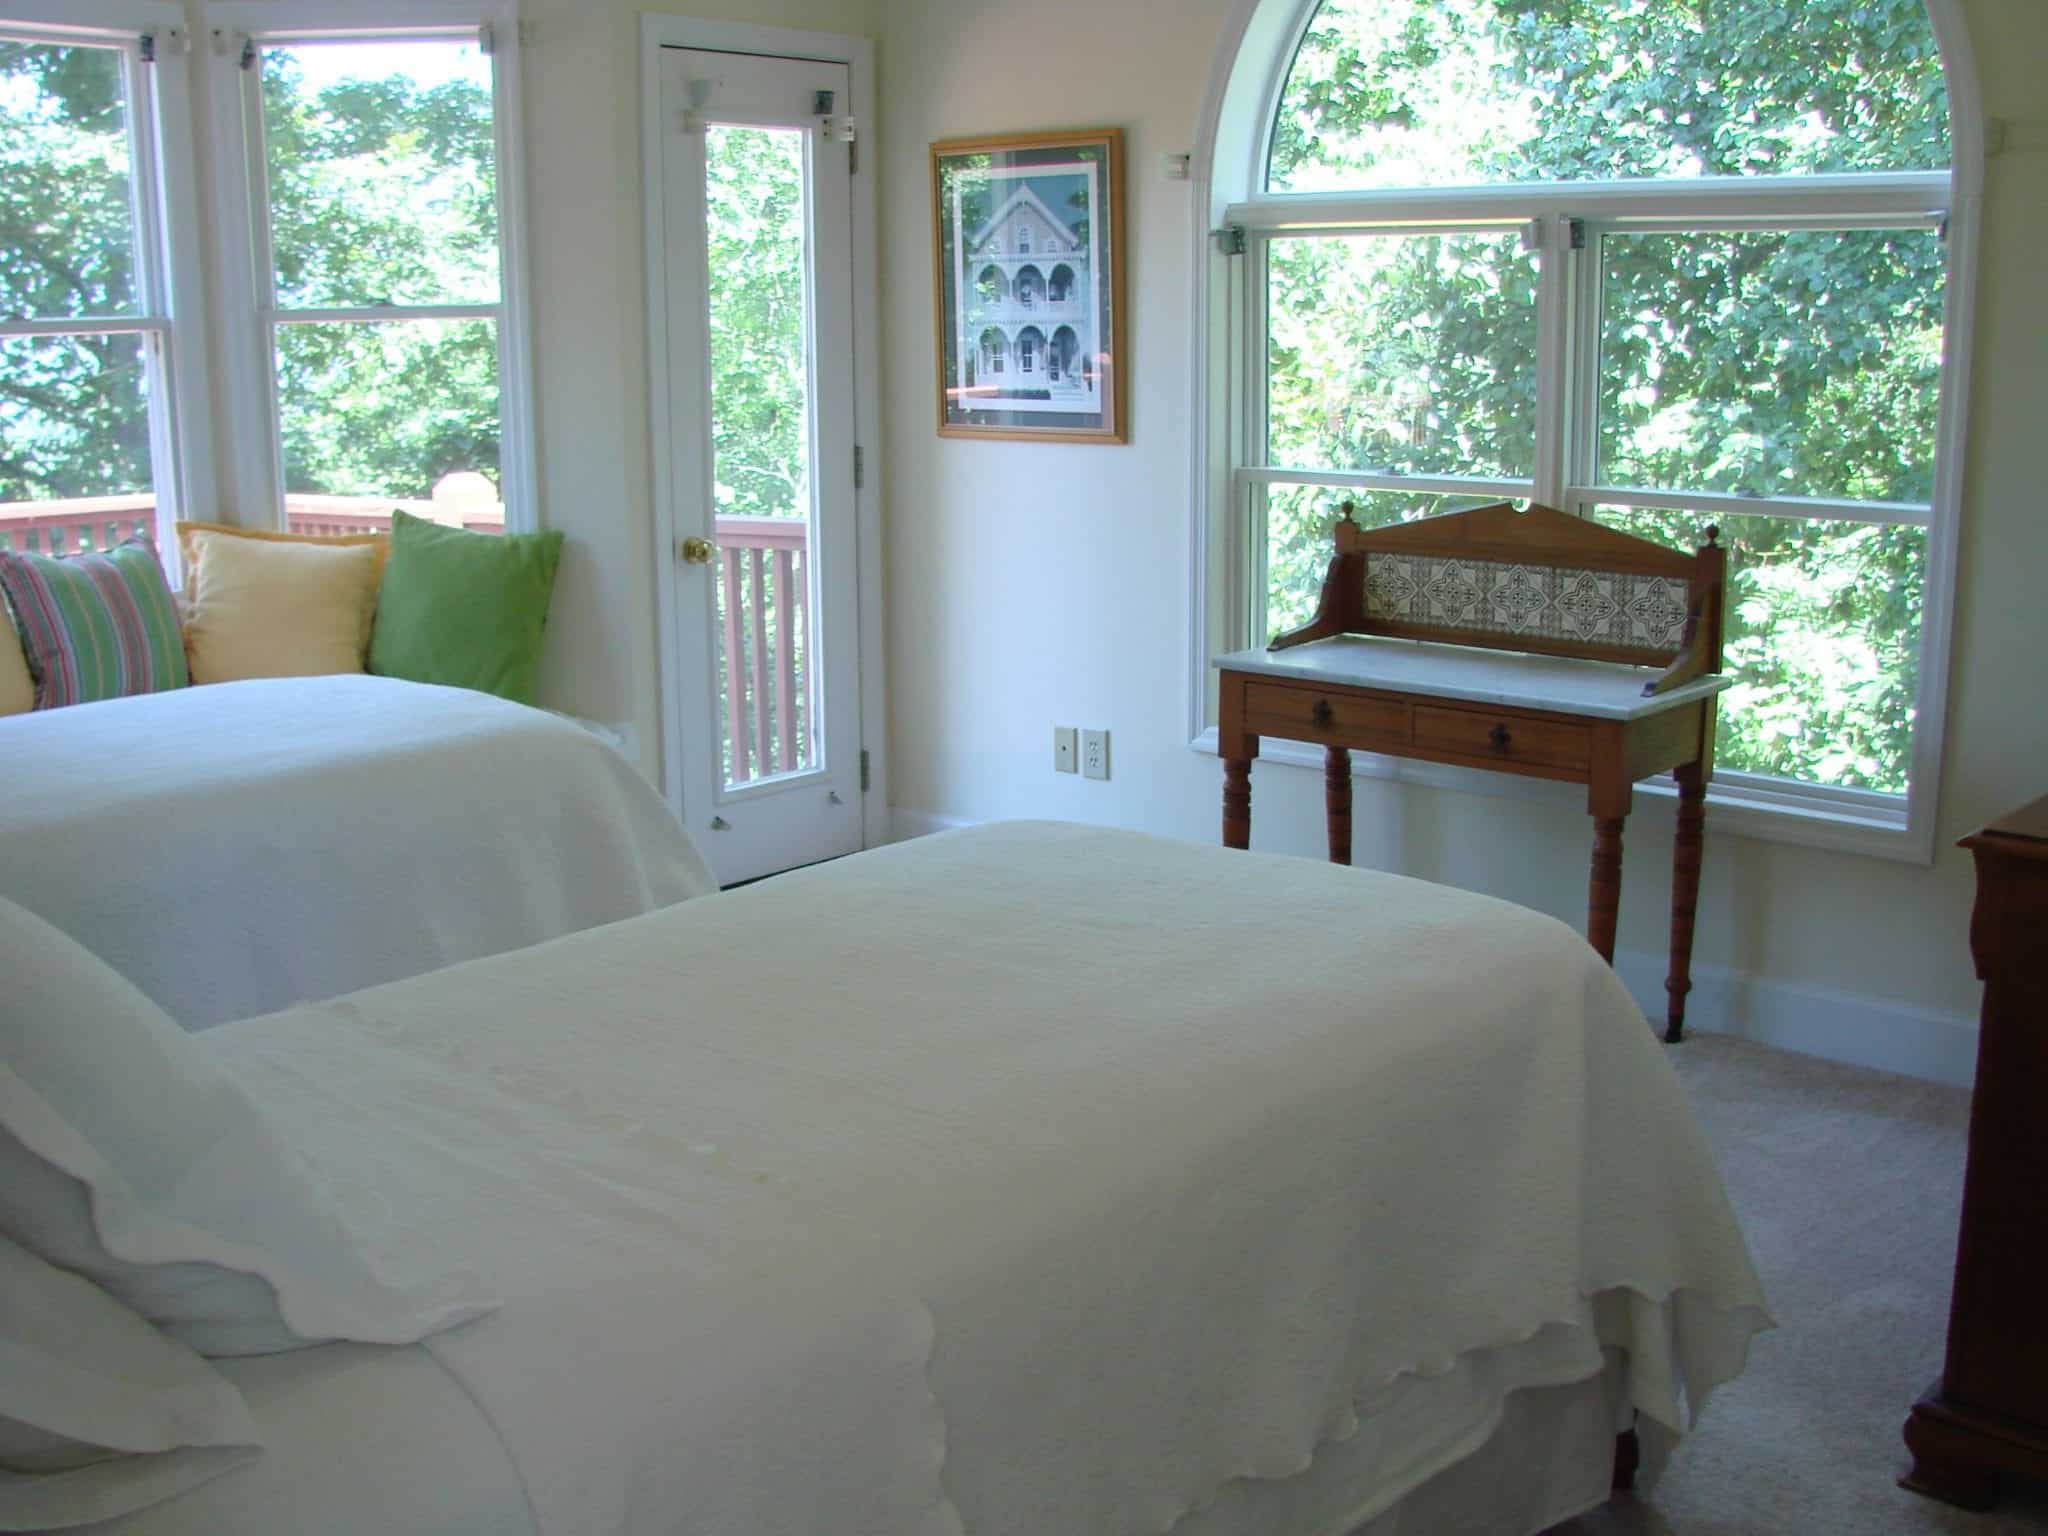 A lovely bedroom in a cabin in Murphy NC.